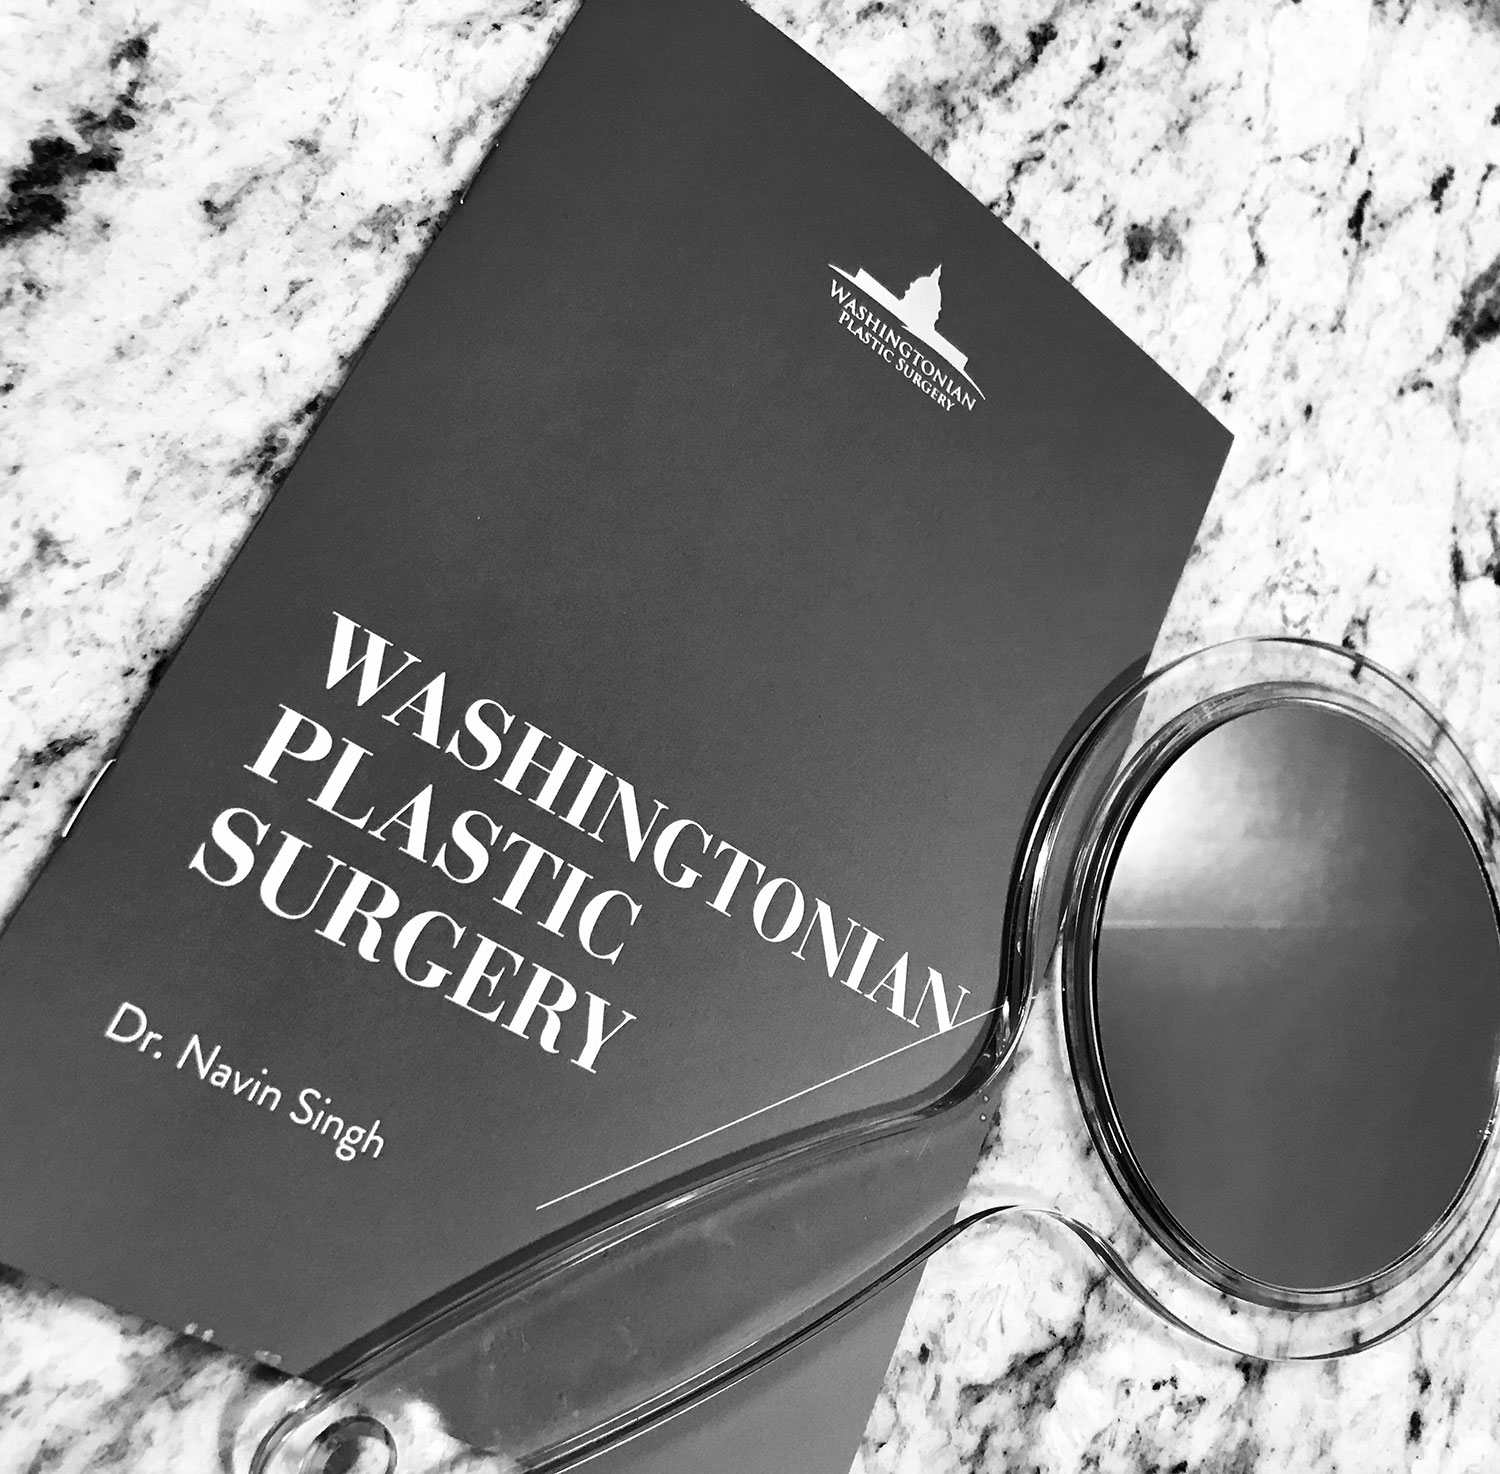 Washingtonian Plastic Surgery book